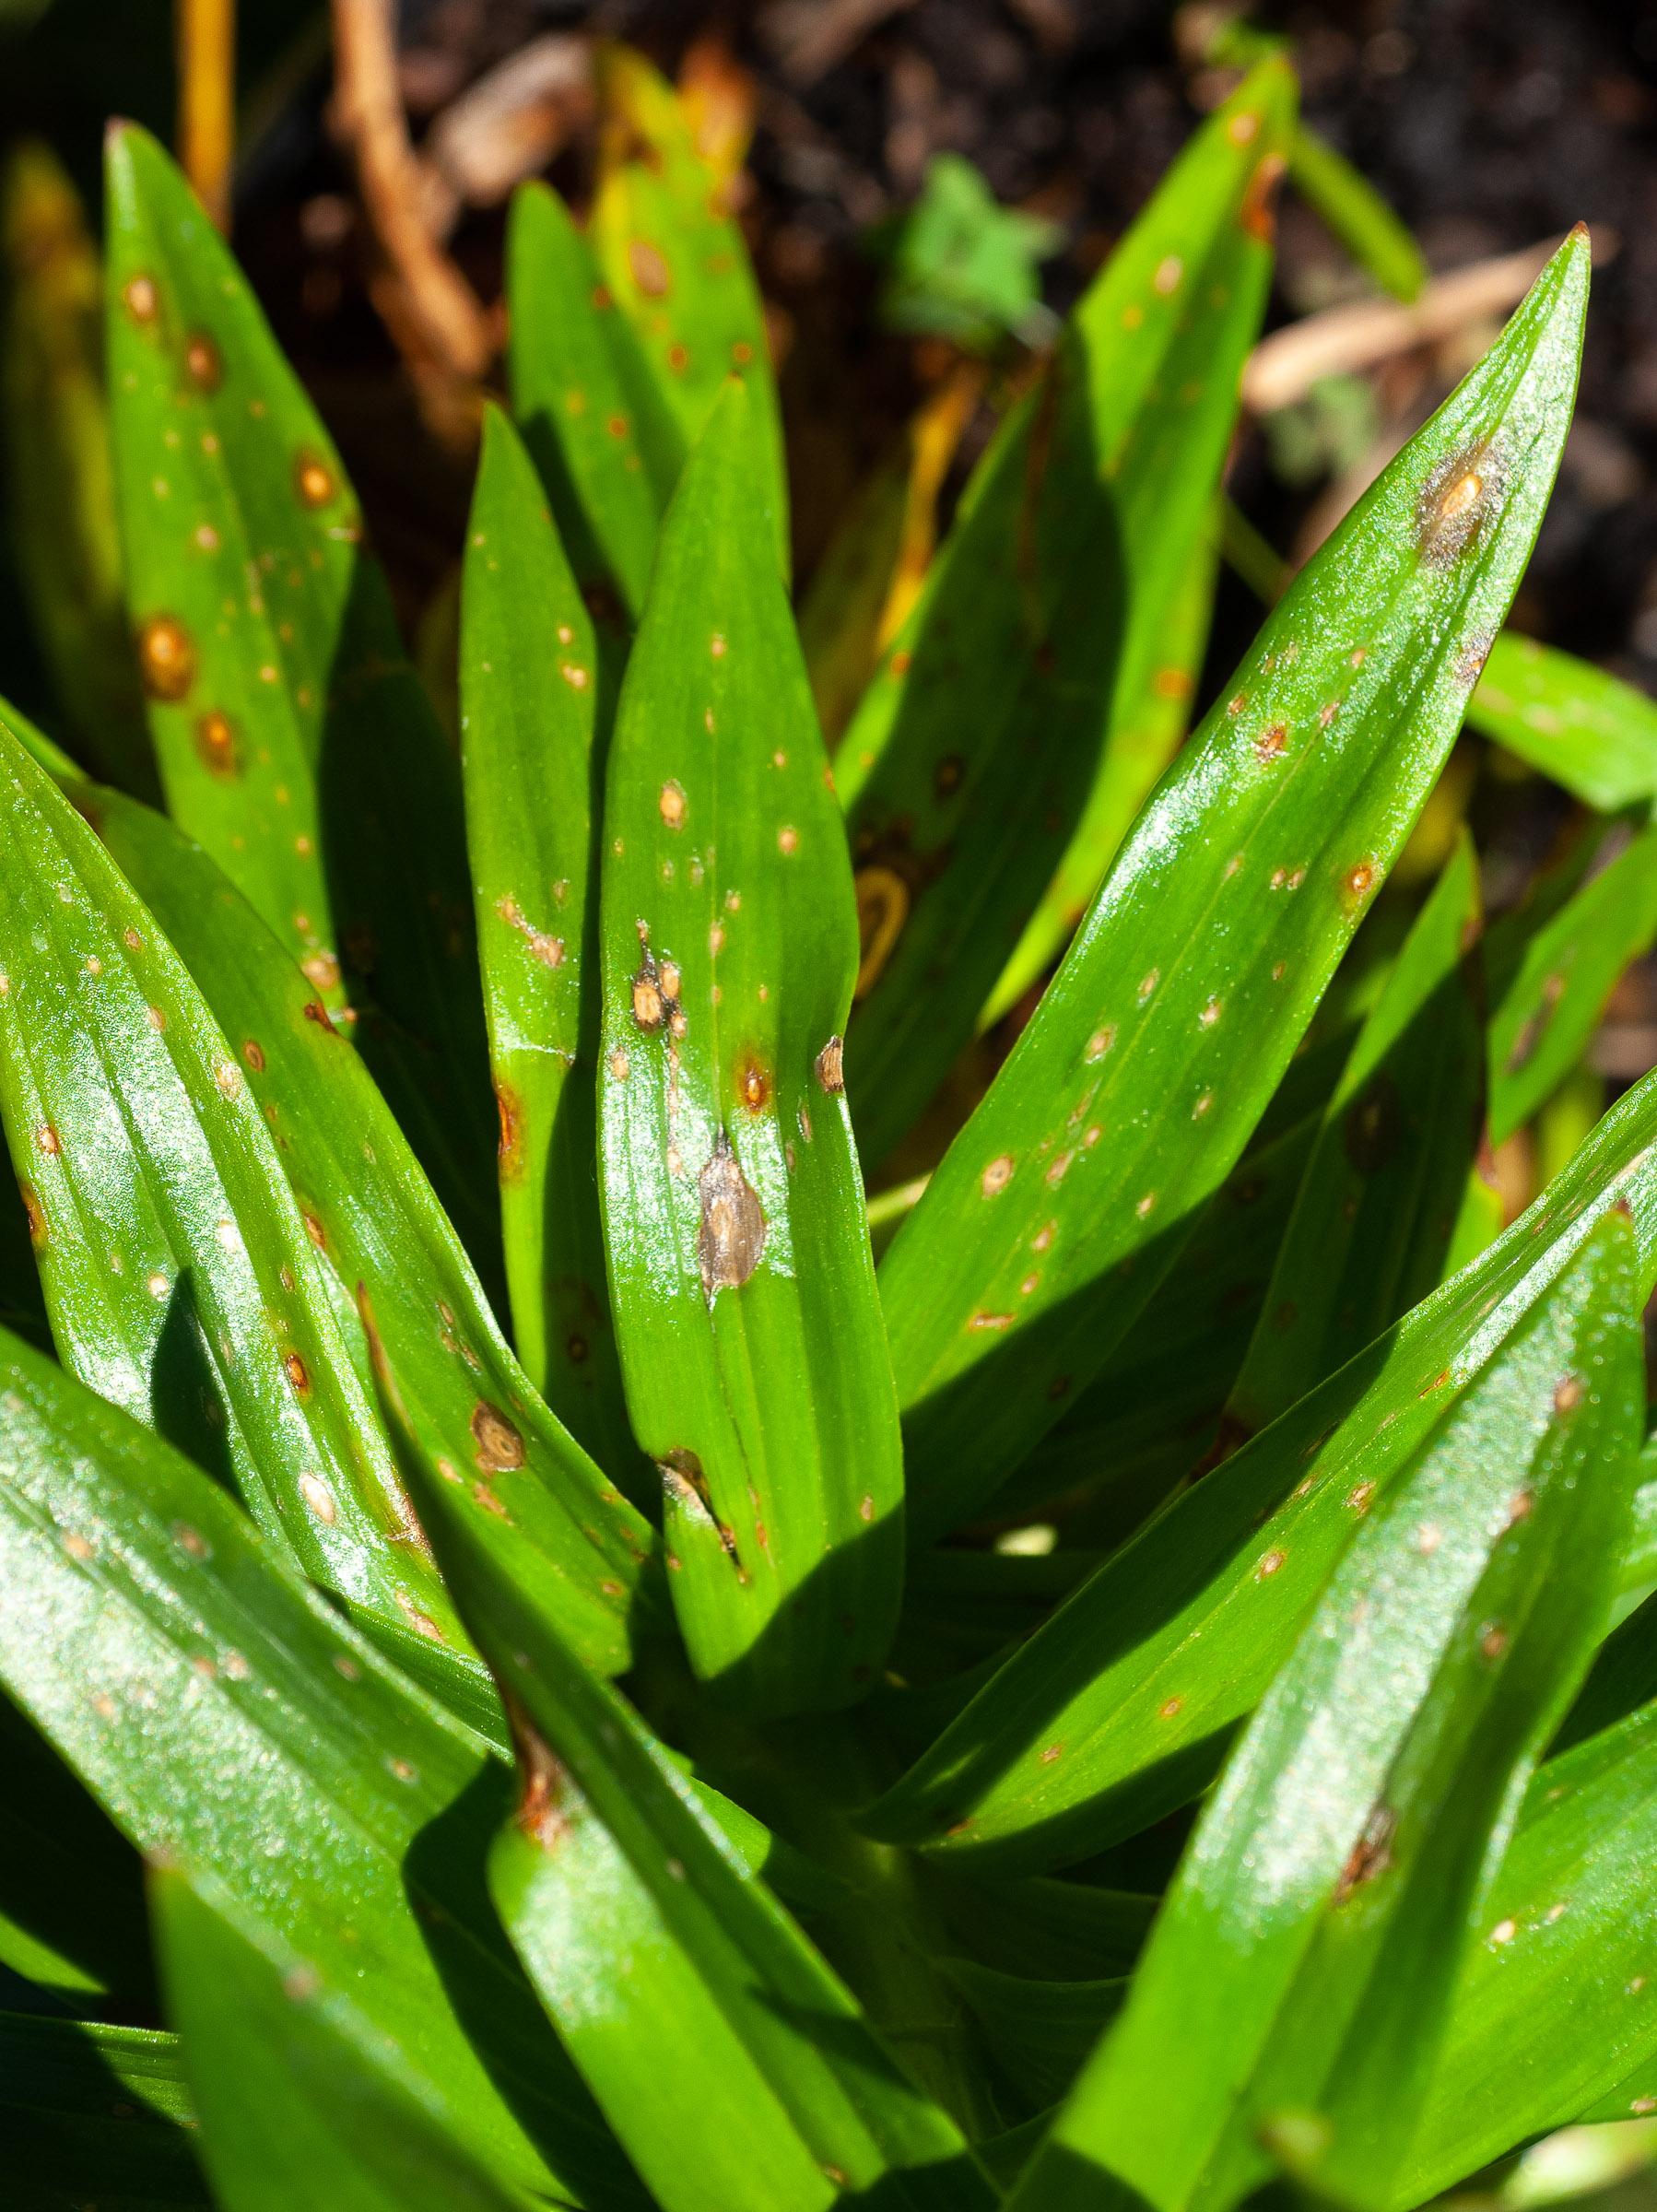 Botrytis leaf spot on lily foliage